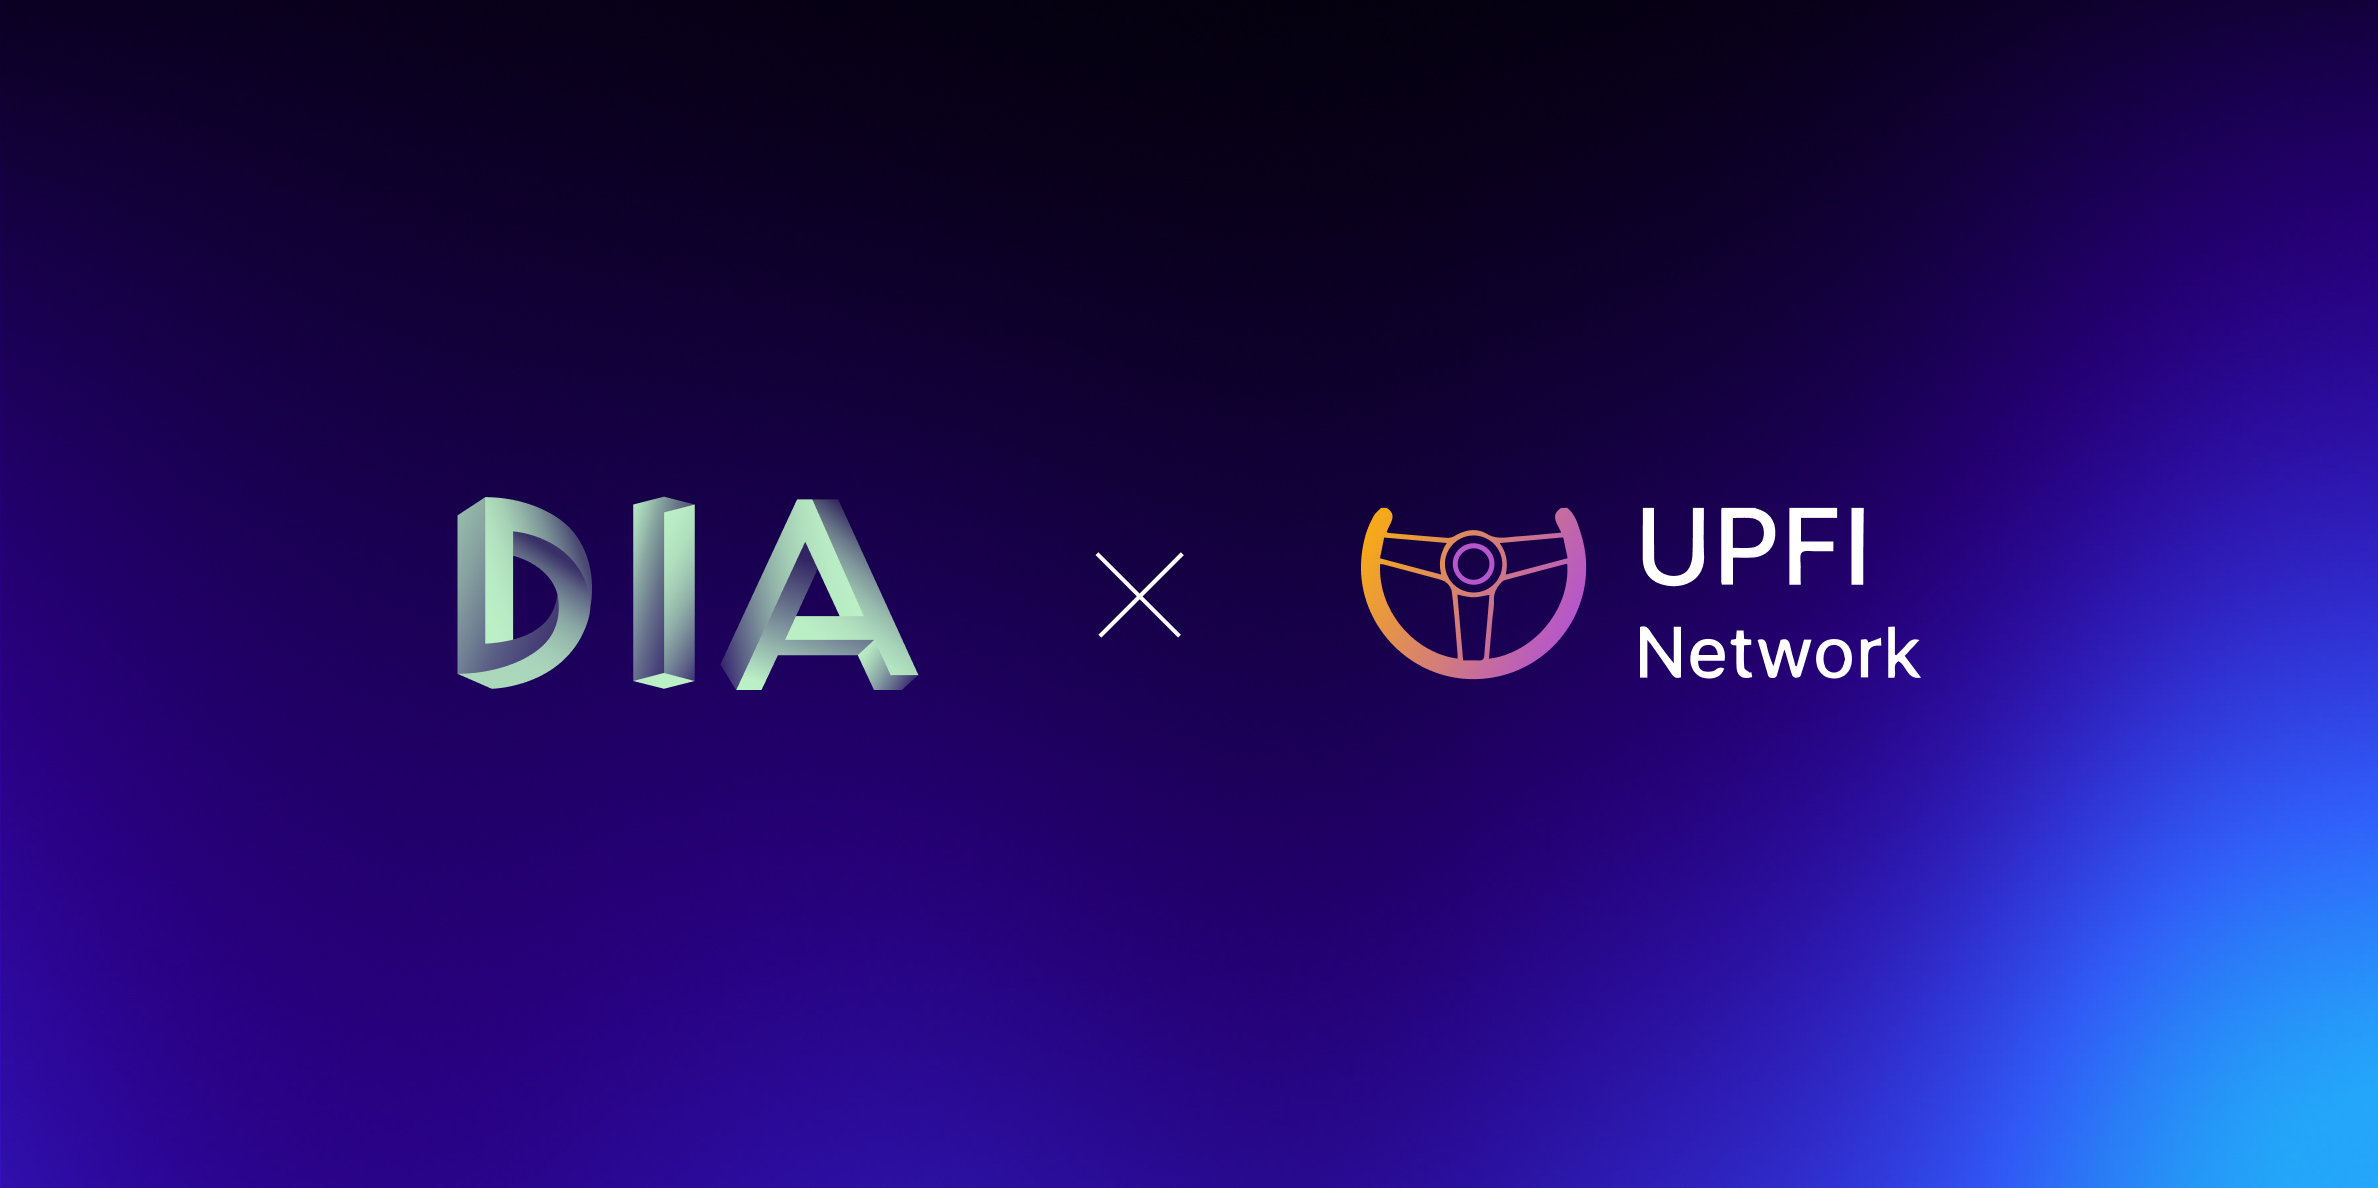 Partnership with UPFI Network